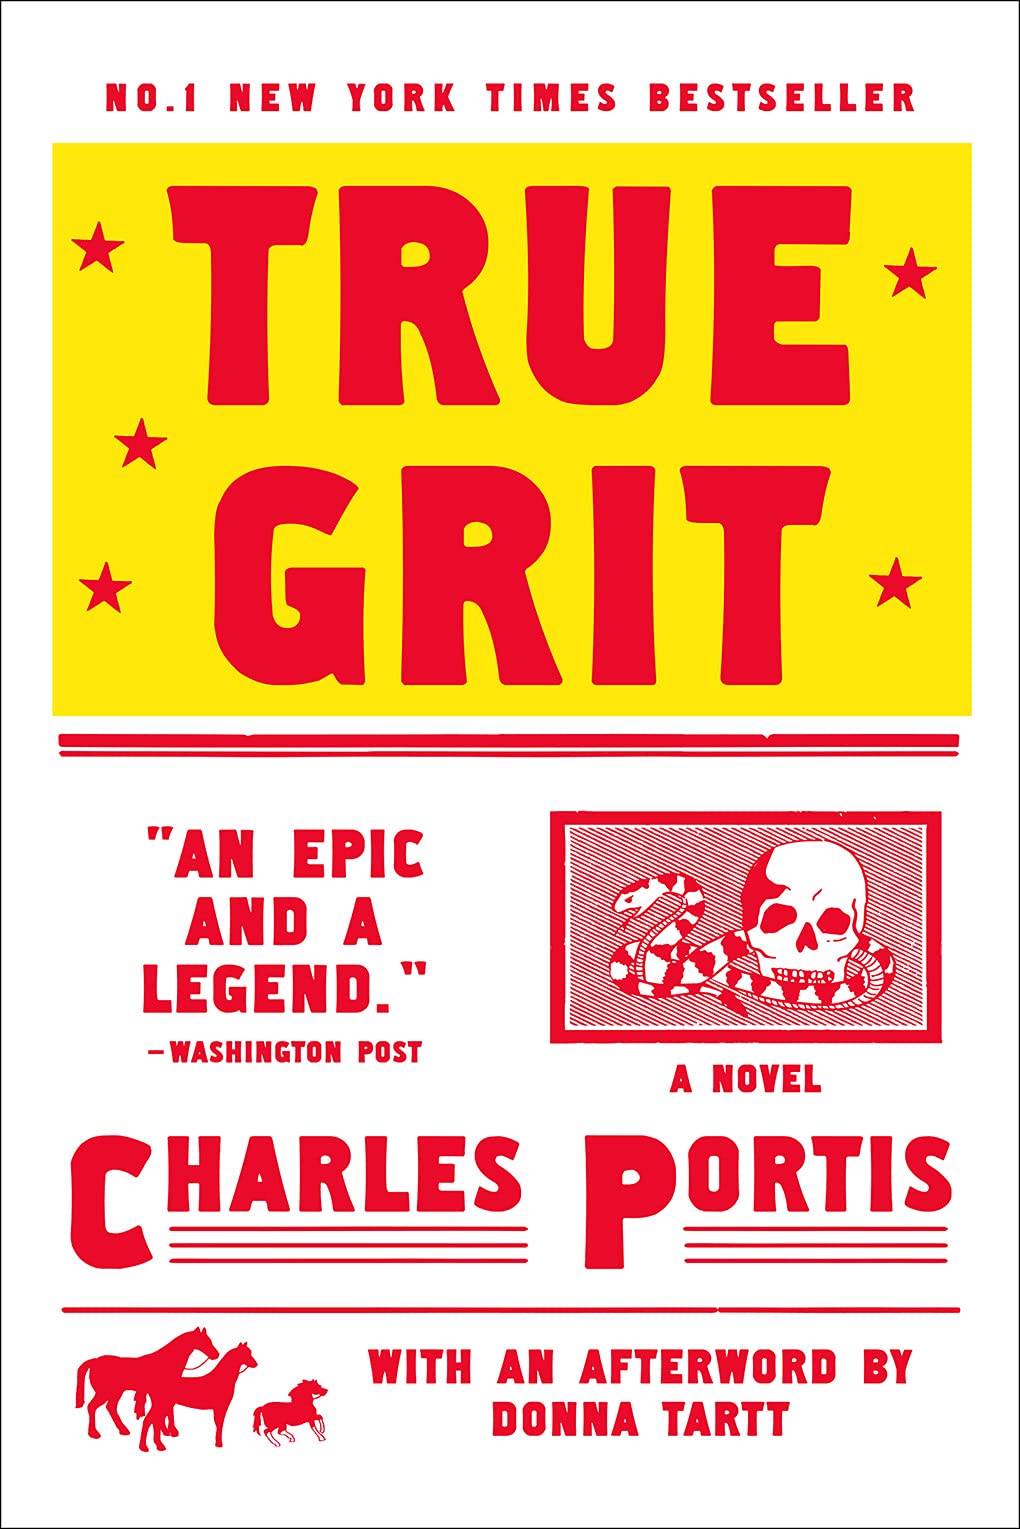 True Grit (Portis - trade paperback)